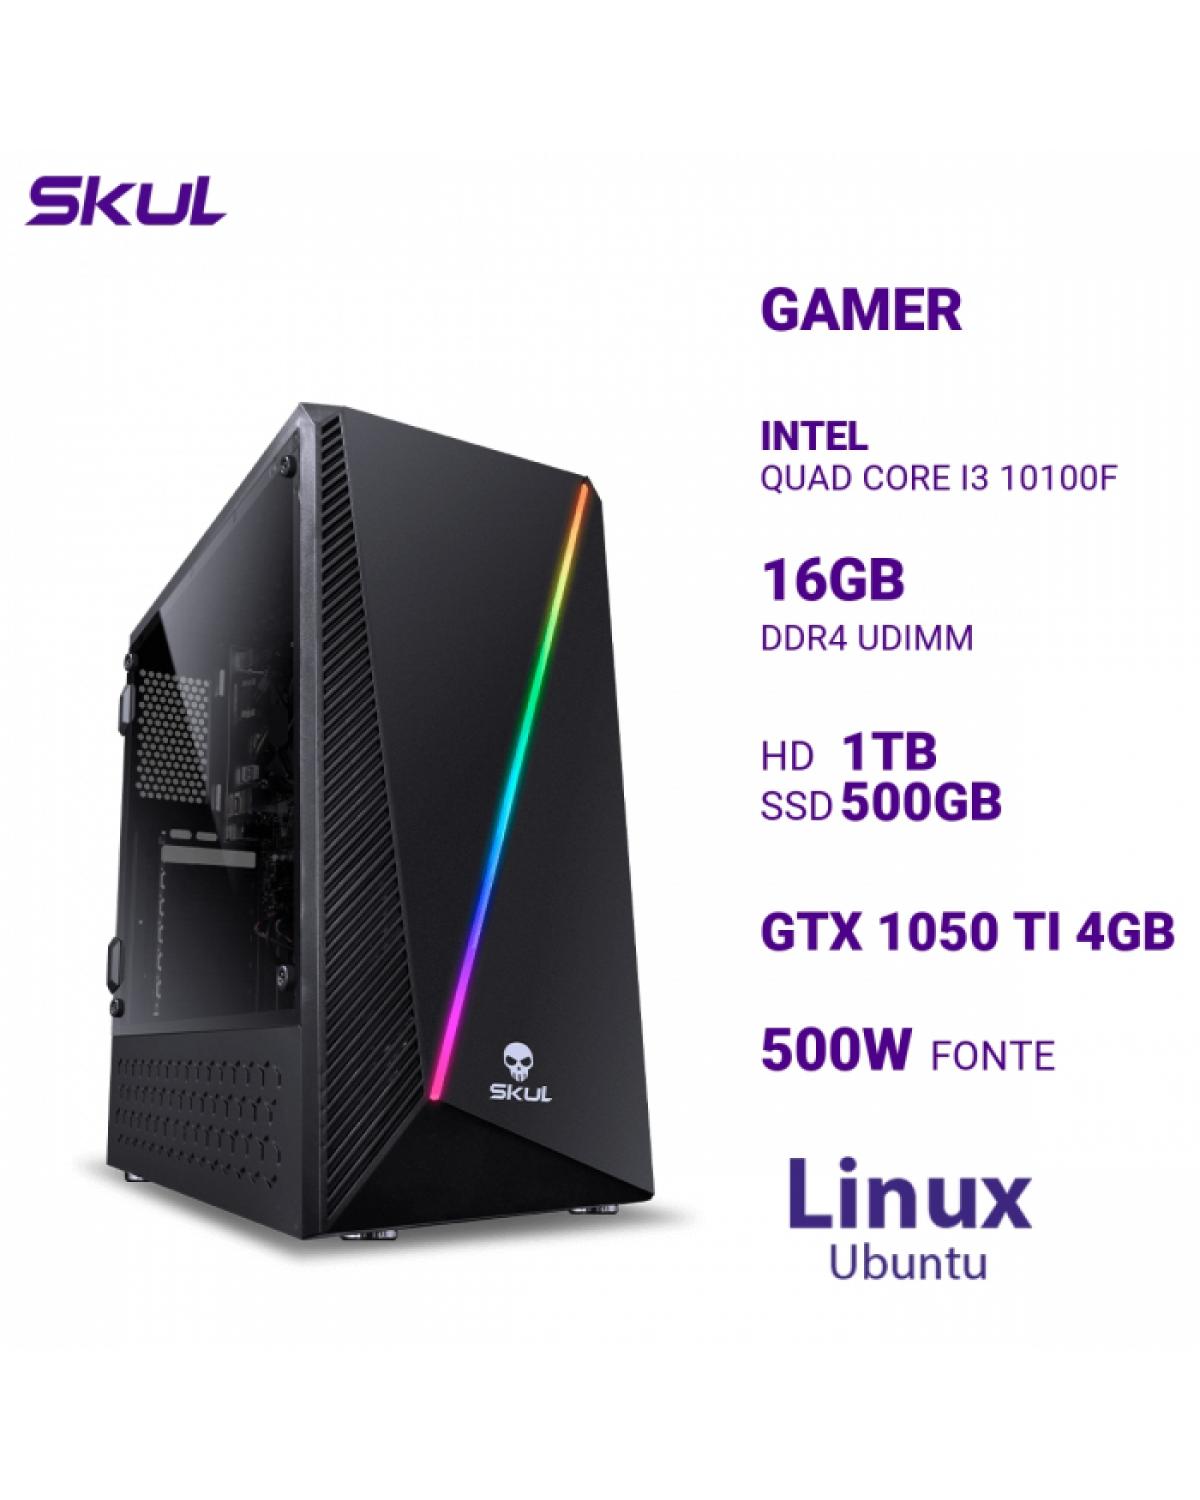 COMPUTADOR GAMER 3000 QUAD CORE I3 10100F MEM 16GB DDR4 HD 1TB SSD 500GB NVME GTX 1050 TI 4GB FONTE 500W LINUX